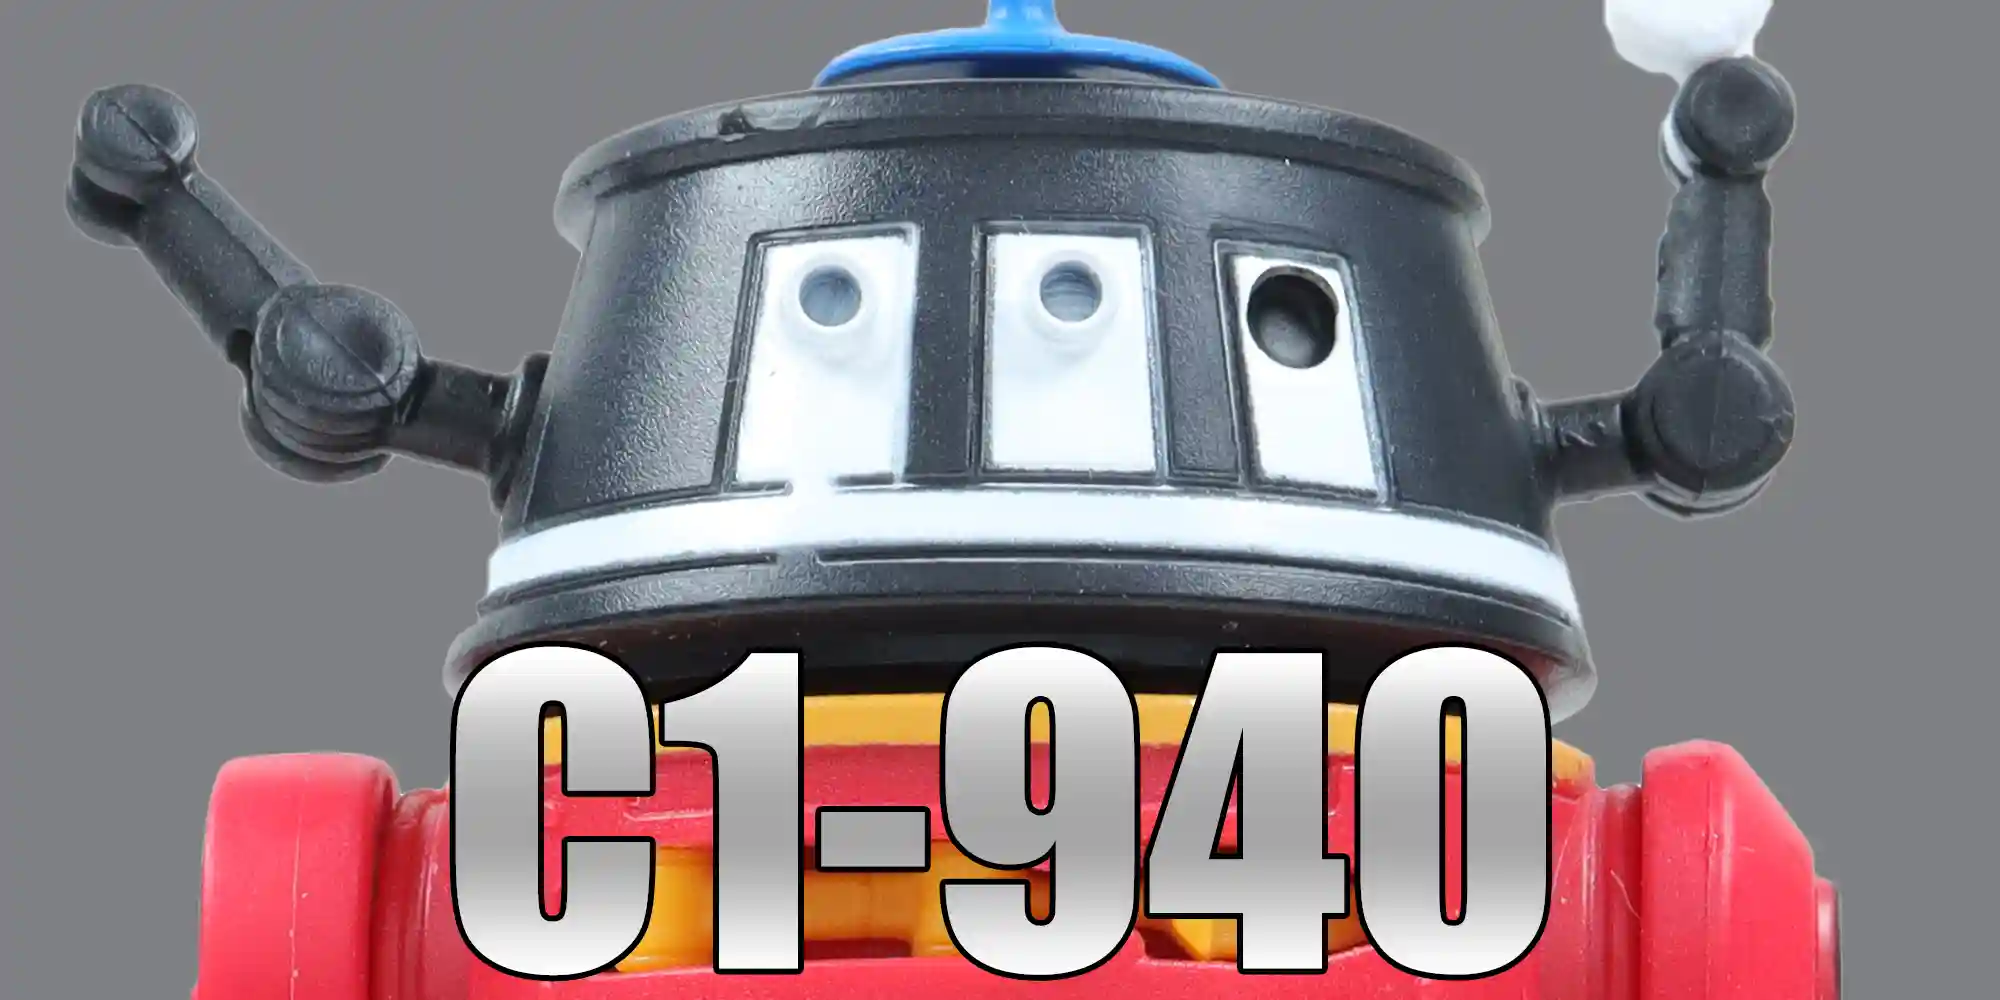 Disney's Exclusive D23 Droid C1-940 Archived